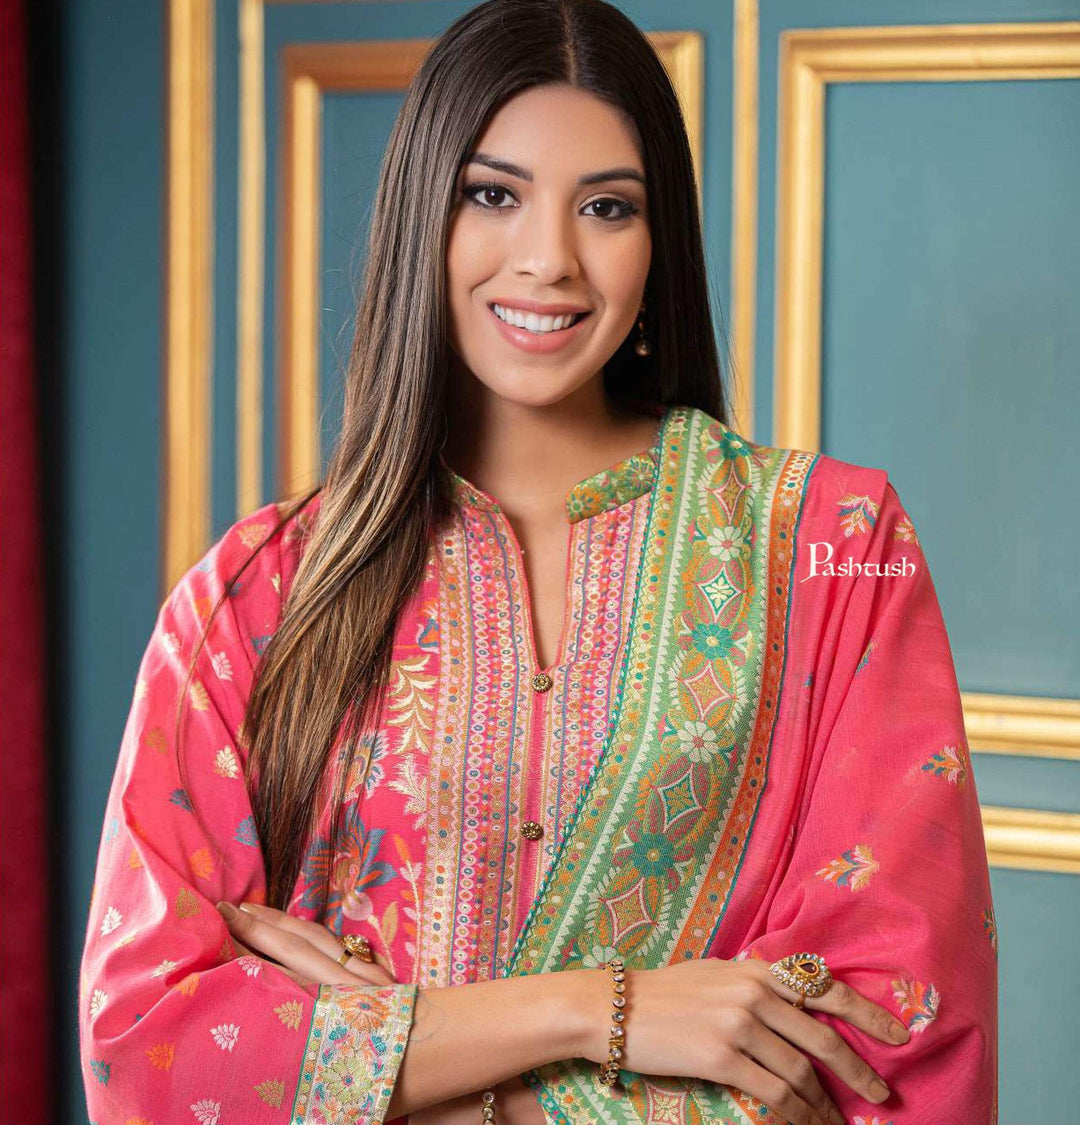 Pashtush India suit Pashtush Womens Ethnic Weave Cotton-Silk Unstitched Suit, Fuchsia